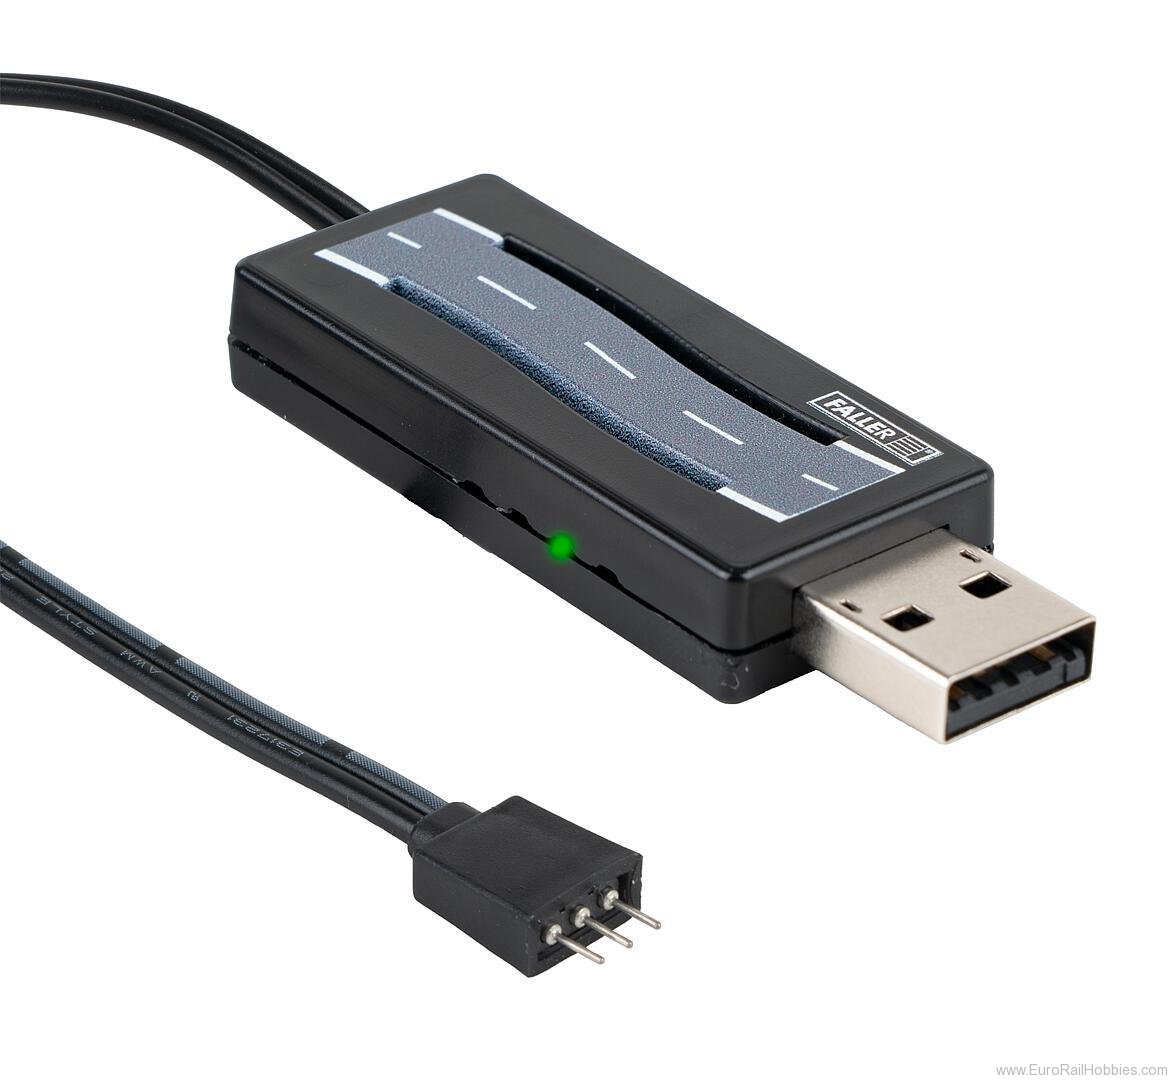 Faller 161415 FALLER Car System USB Charger 